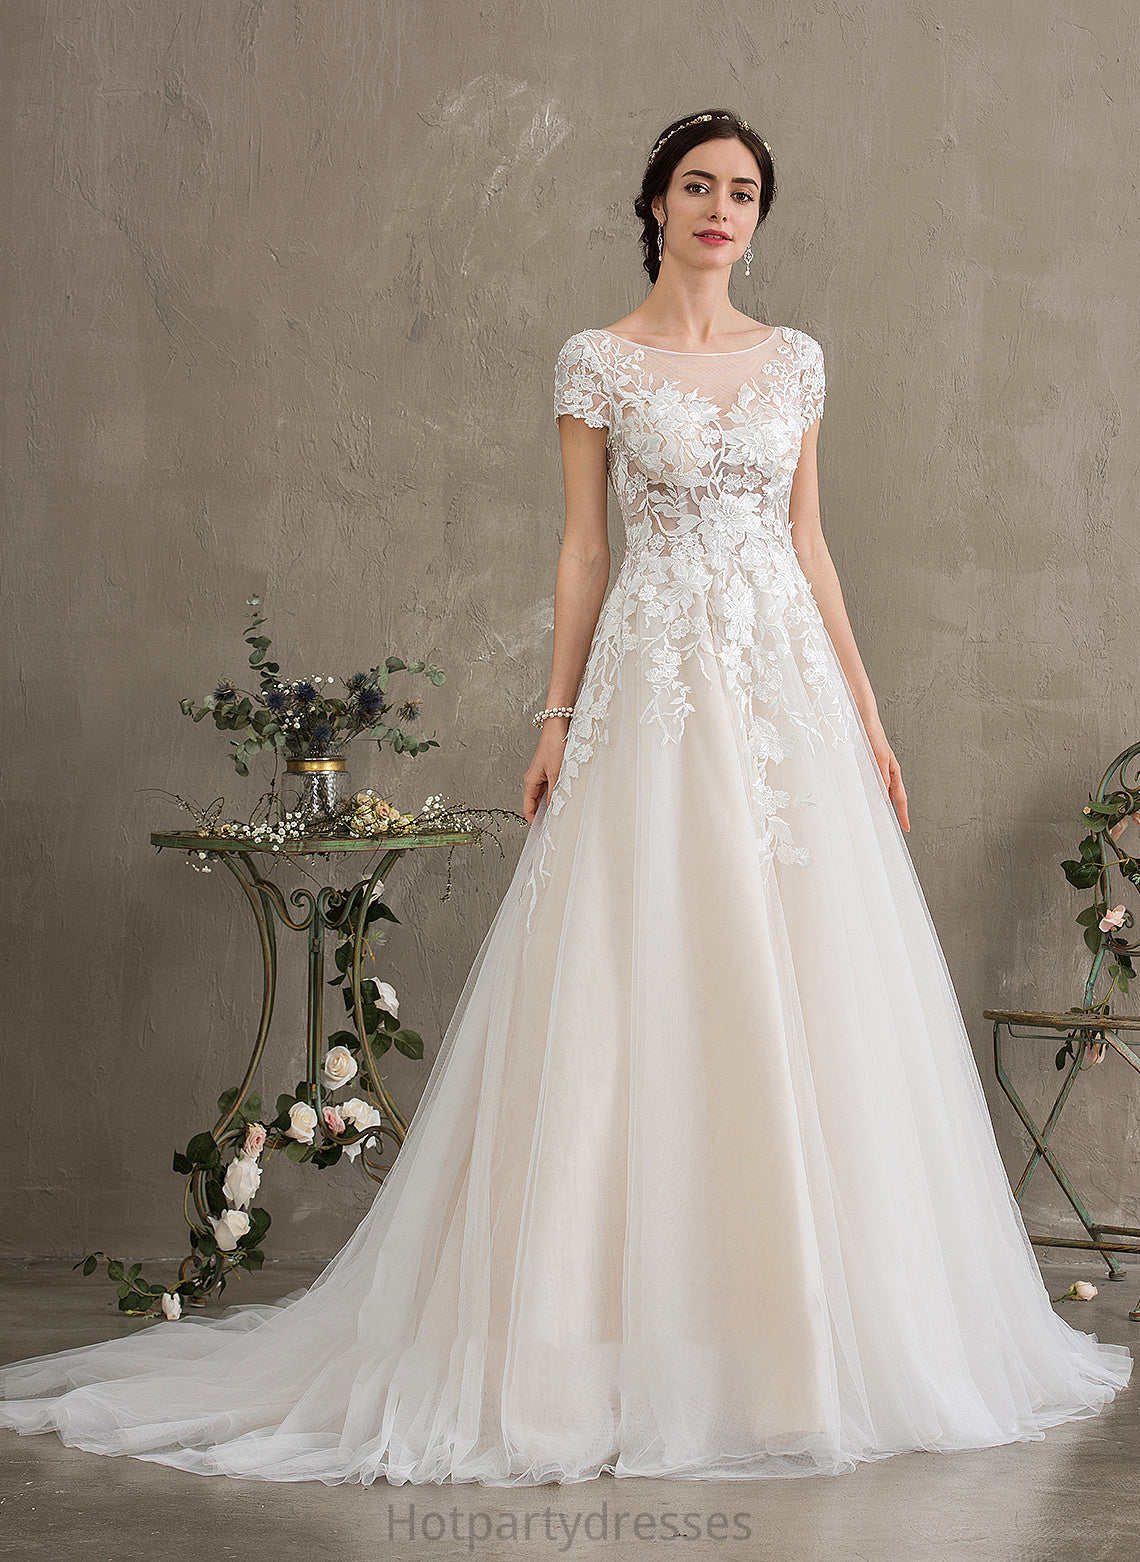 Illusion Wedding Train Court Dress Alyson Wedding Dresses Tulle Ball-Gown/Princess